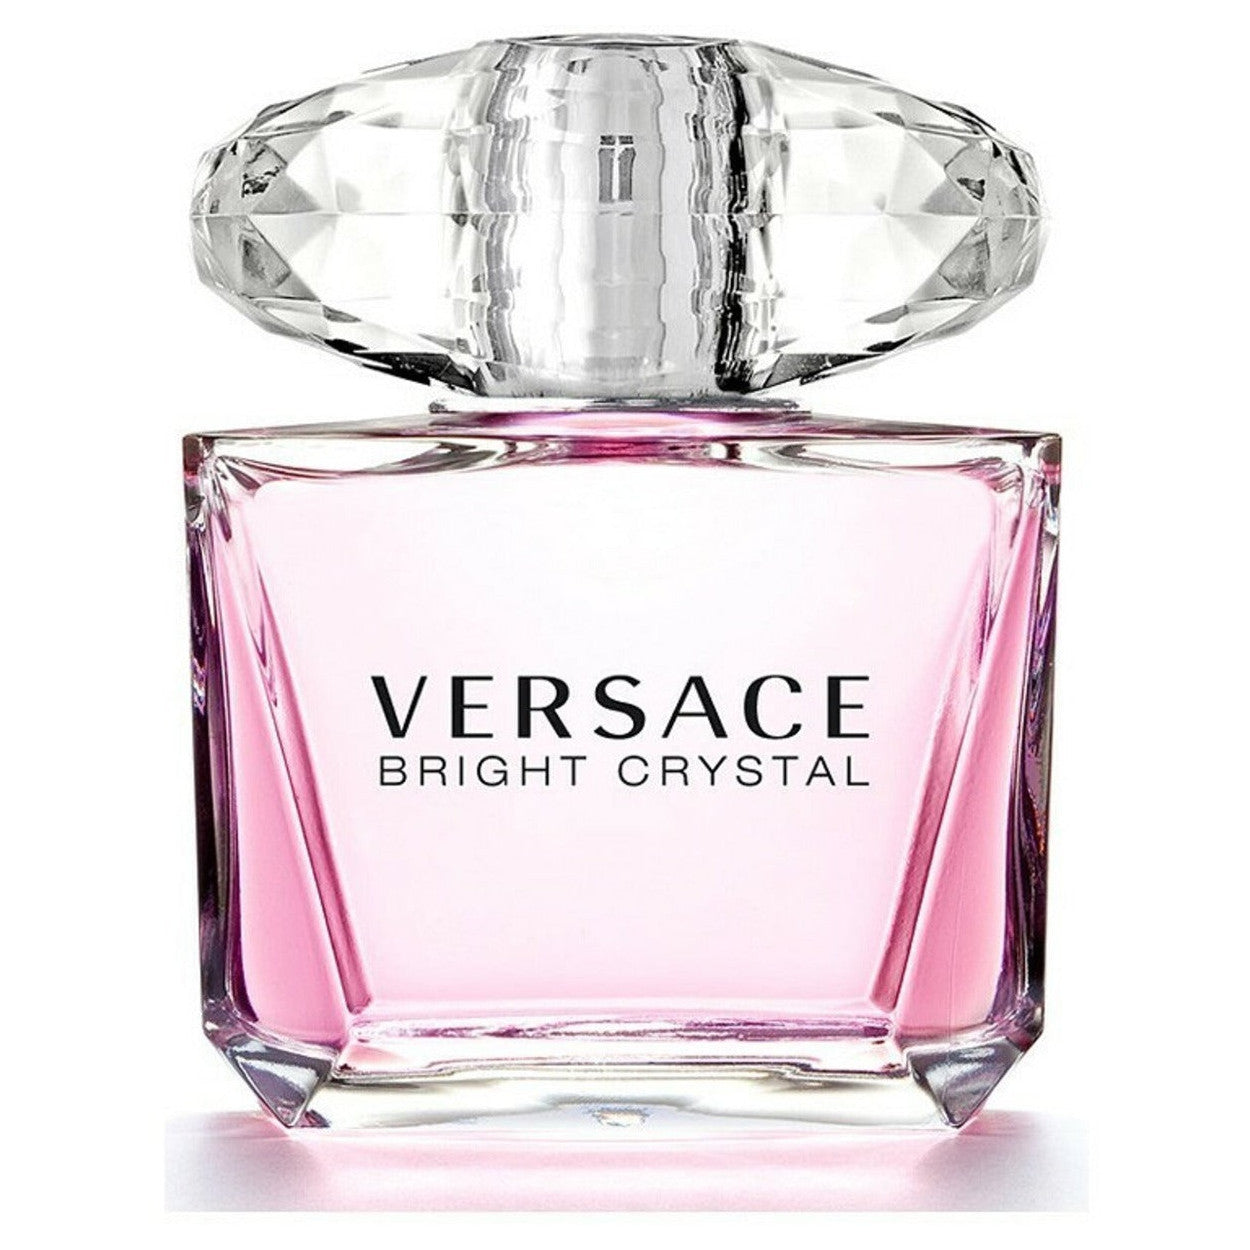 Bright Crystal by Versace - perfumes for women -   Eau de Toilette, 200ml - samawa perfumes 